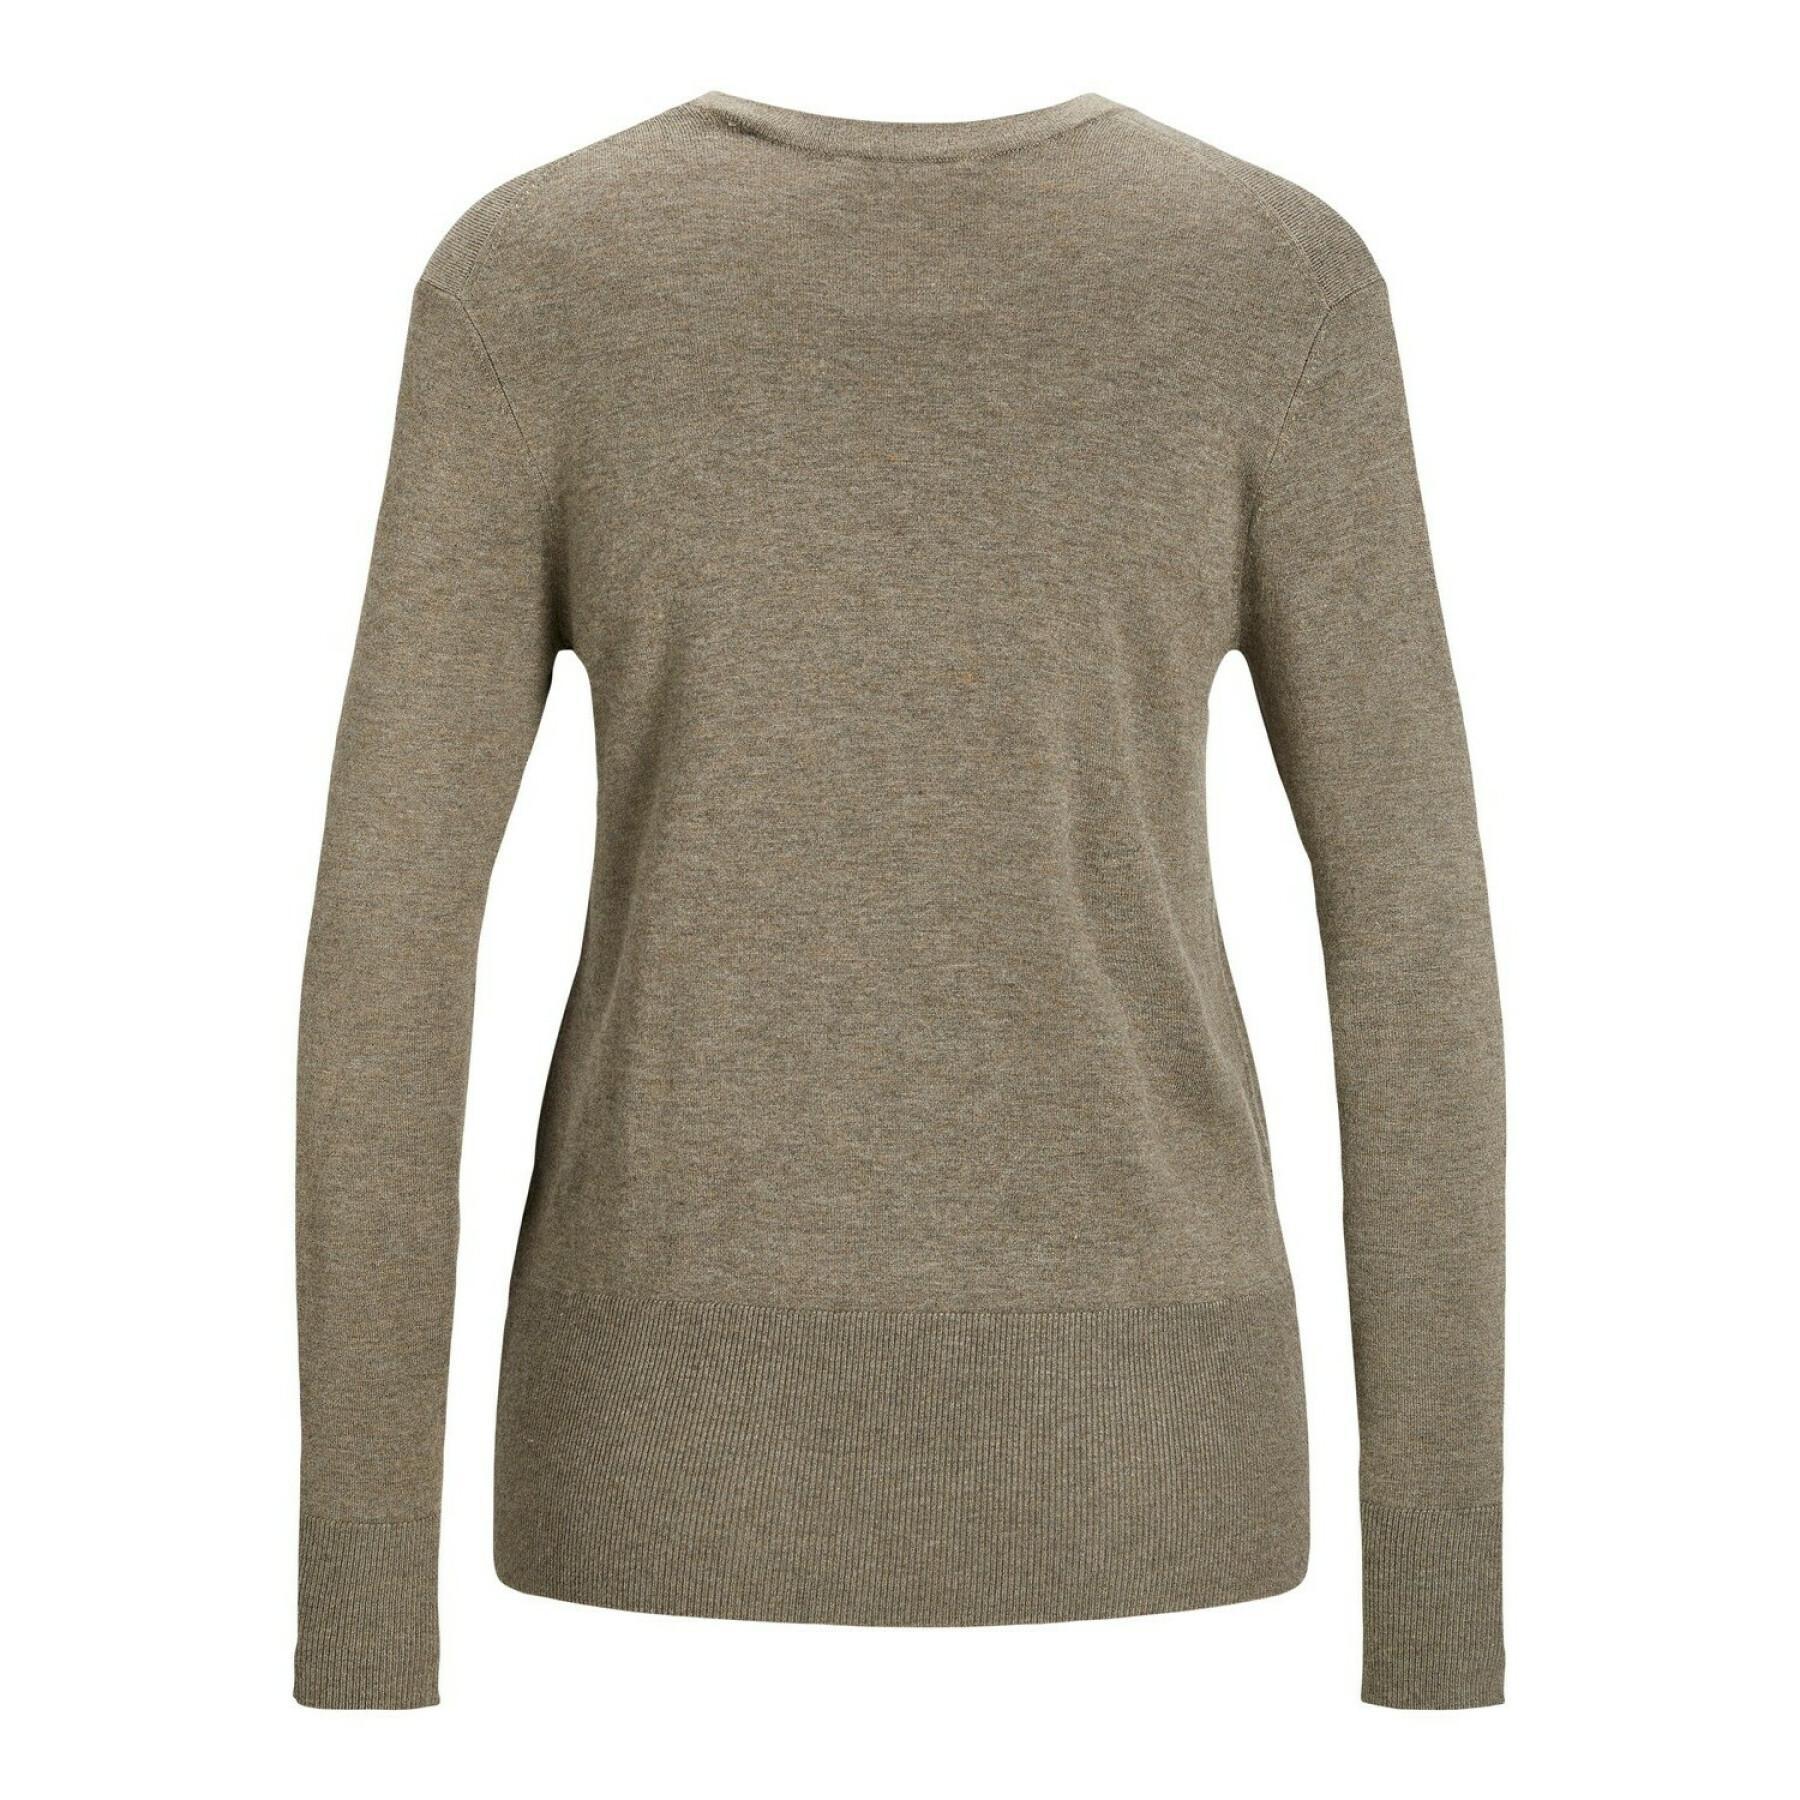 Women's long-sleeved sweater JJXX lara soft